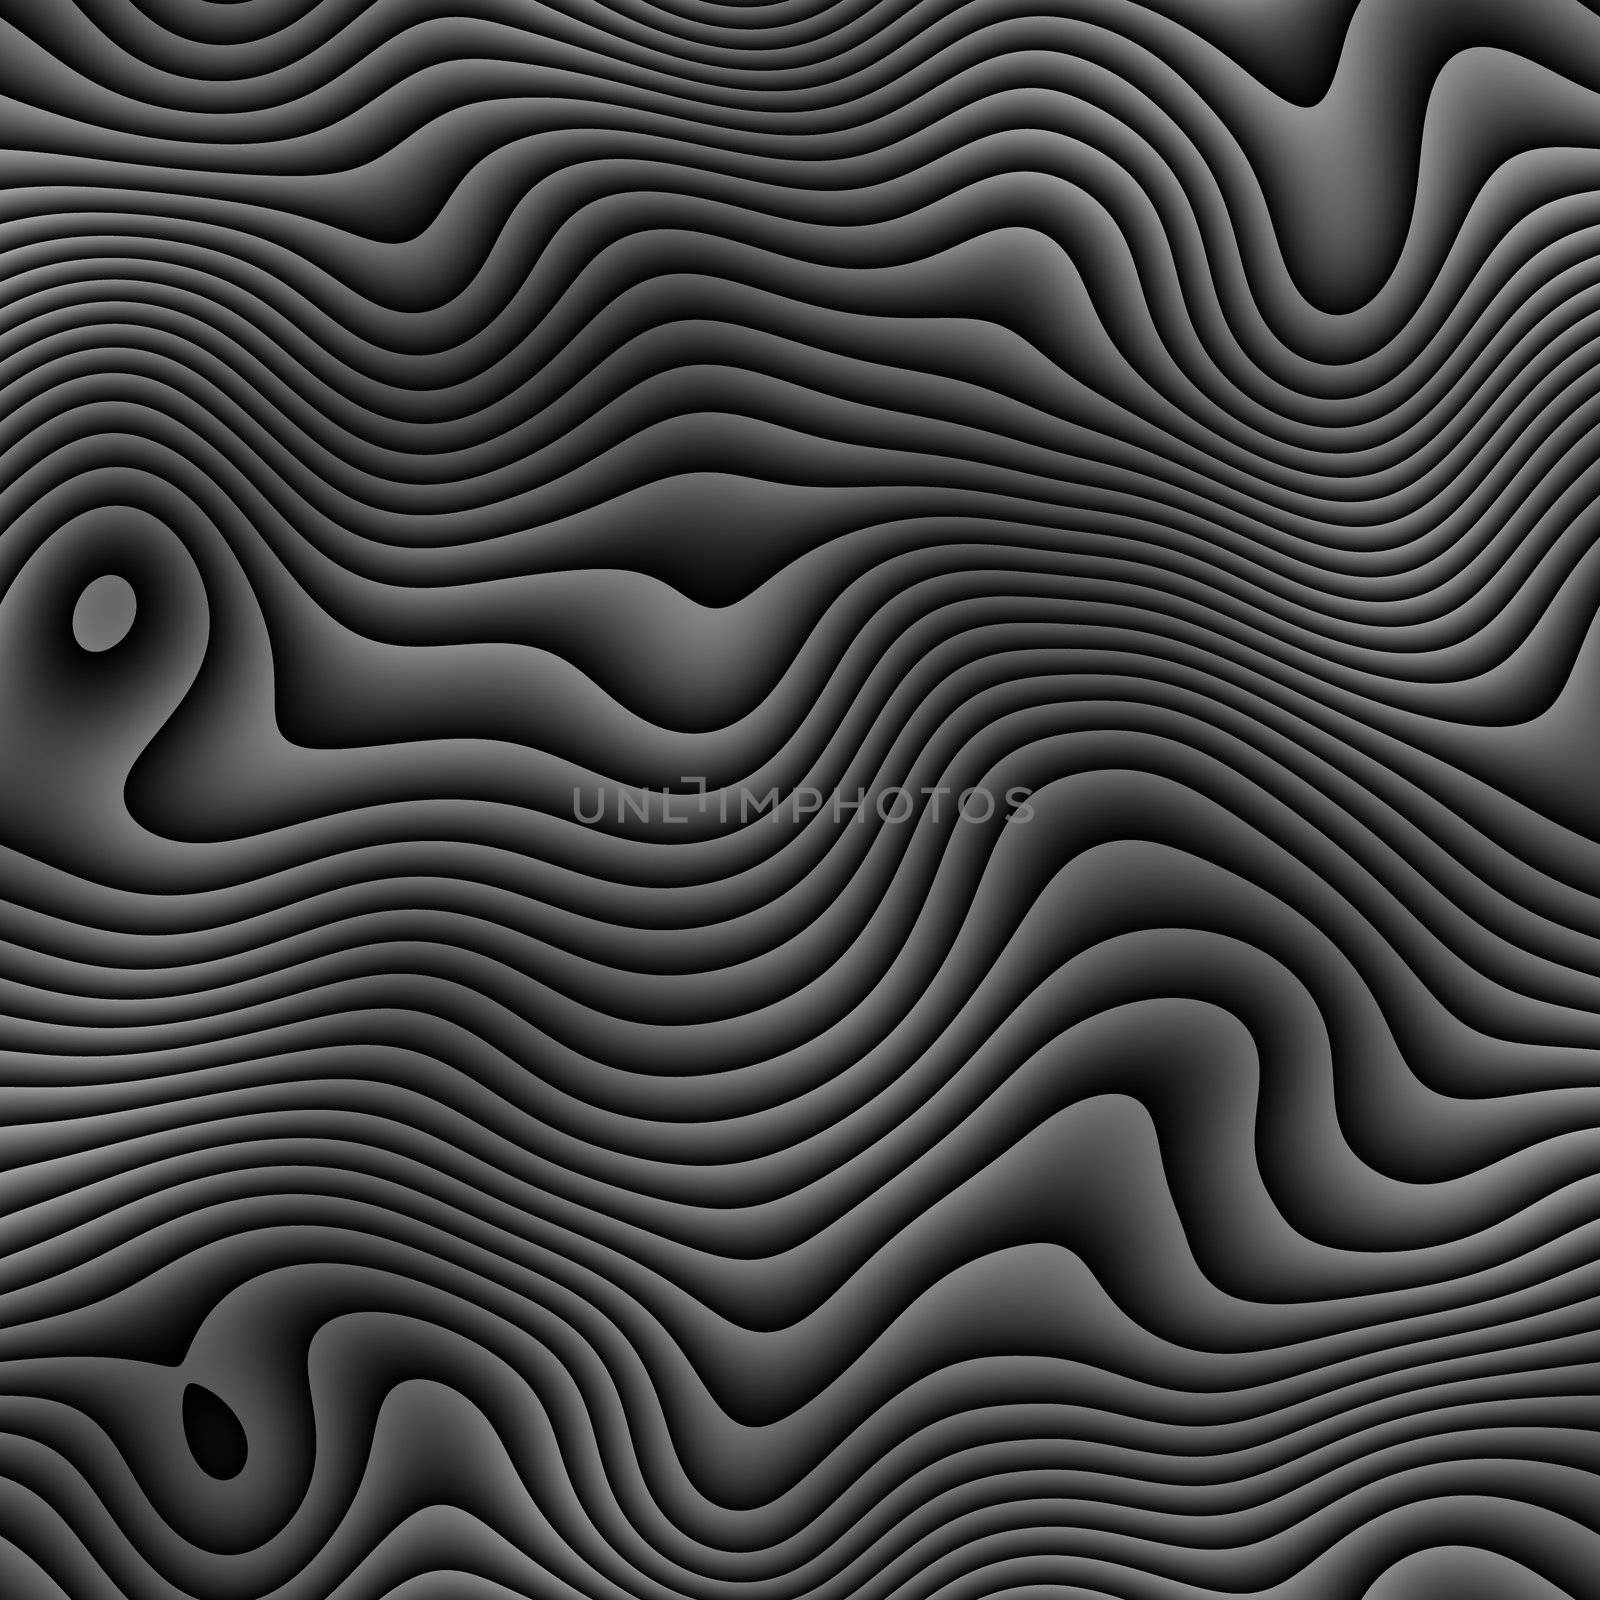 black and white retro zebra style pattern, tiles seamlessly

